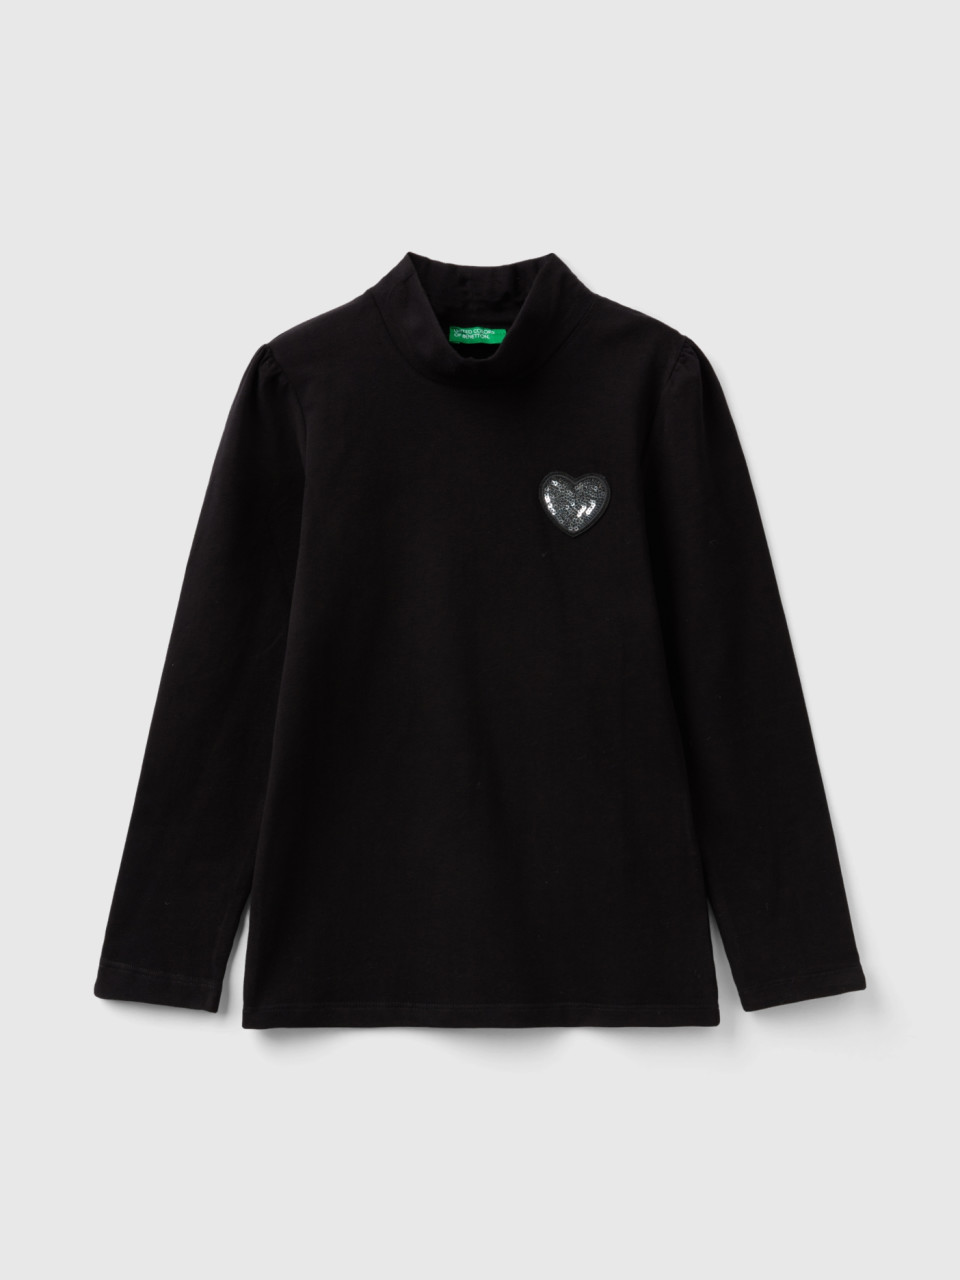 Benetton, Turtle Neck T-shirt Con Sequined Patch, Black, Kids